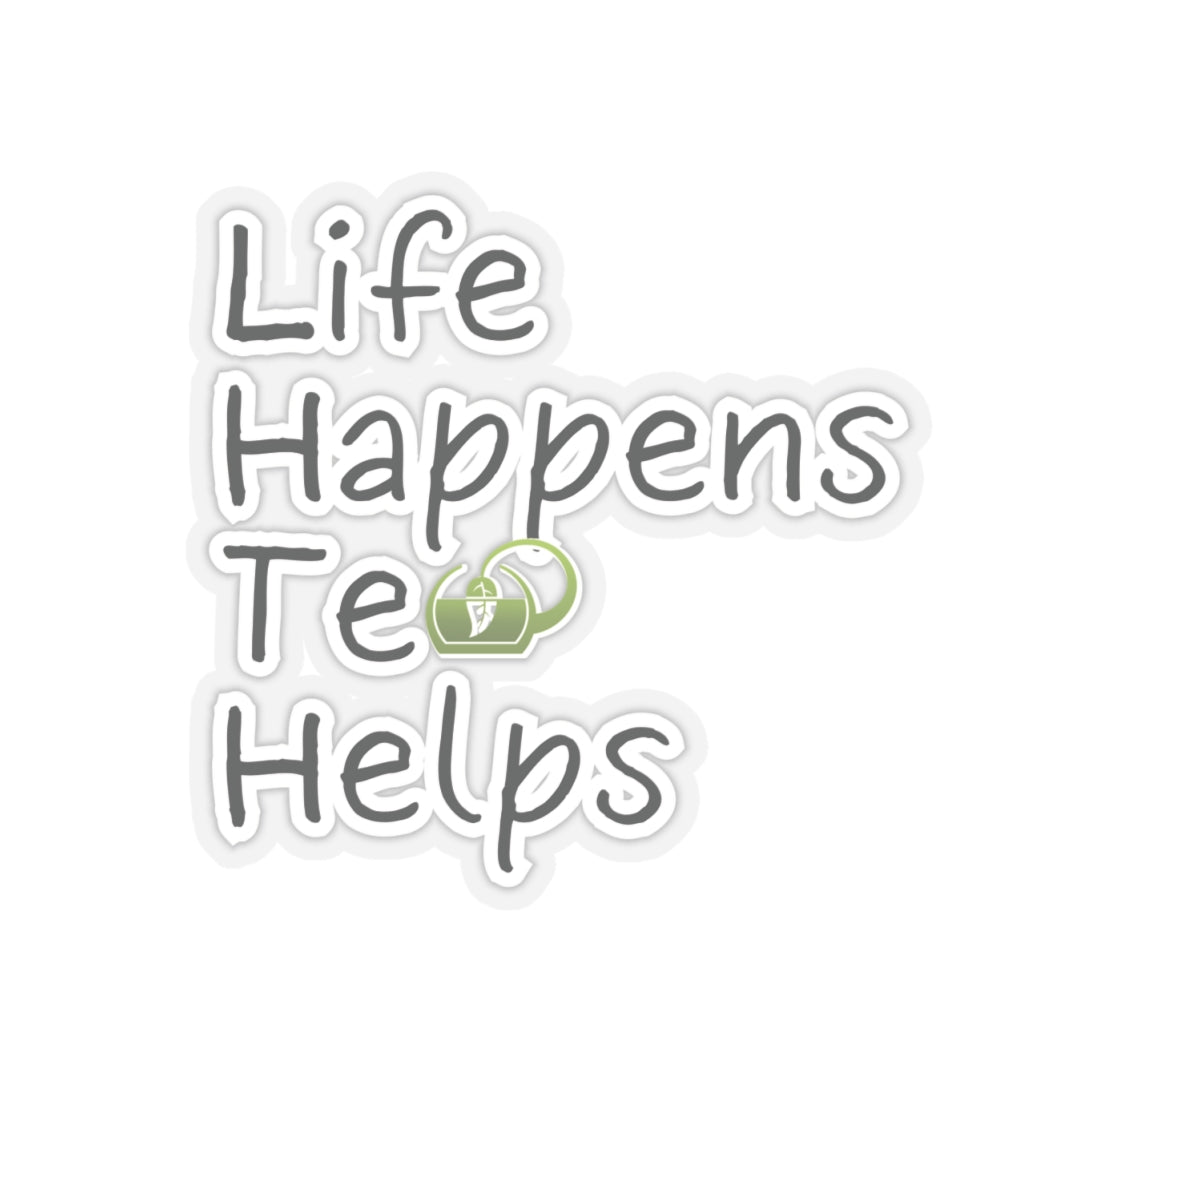 Life Happens Tea Helps Inspirational Quote Kiss-Cut Stickers-Paper products-4" × 4"-Transparent-mysticalcherry